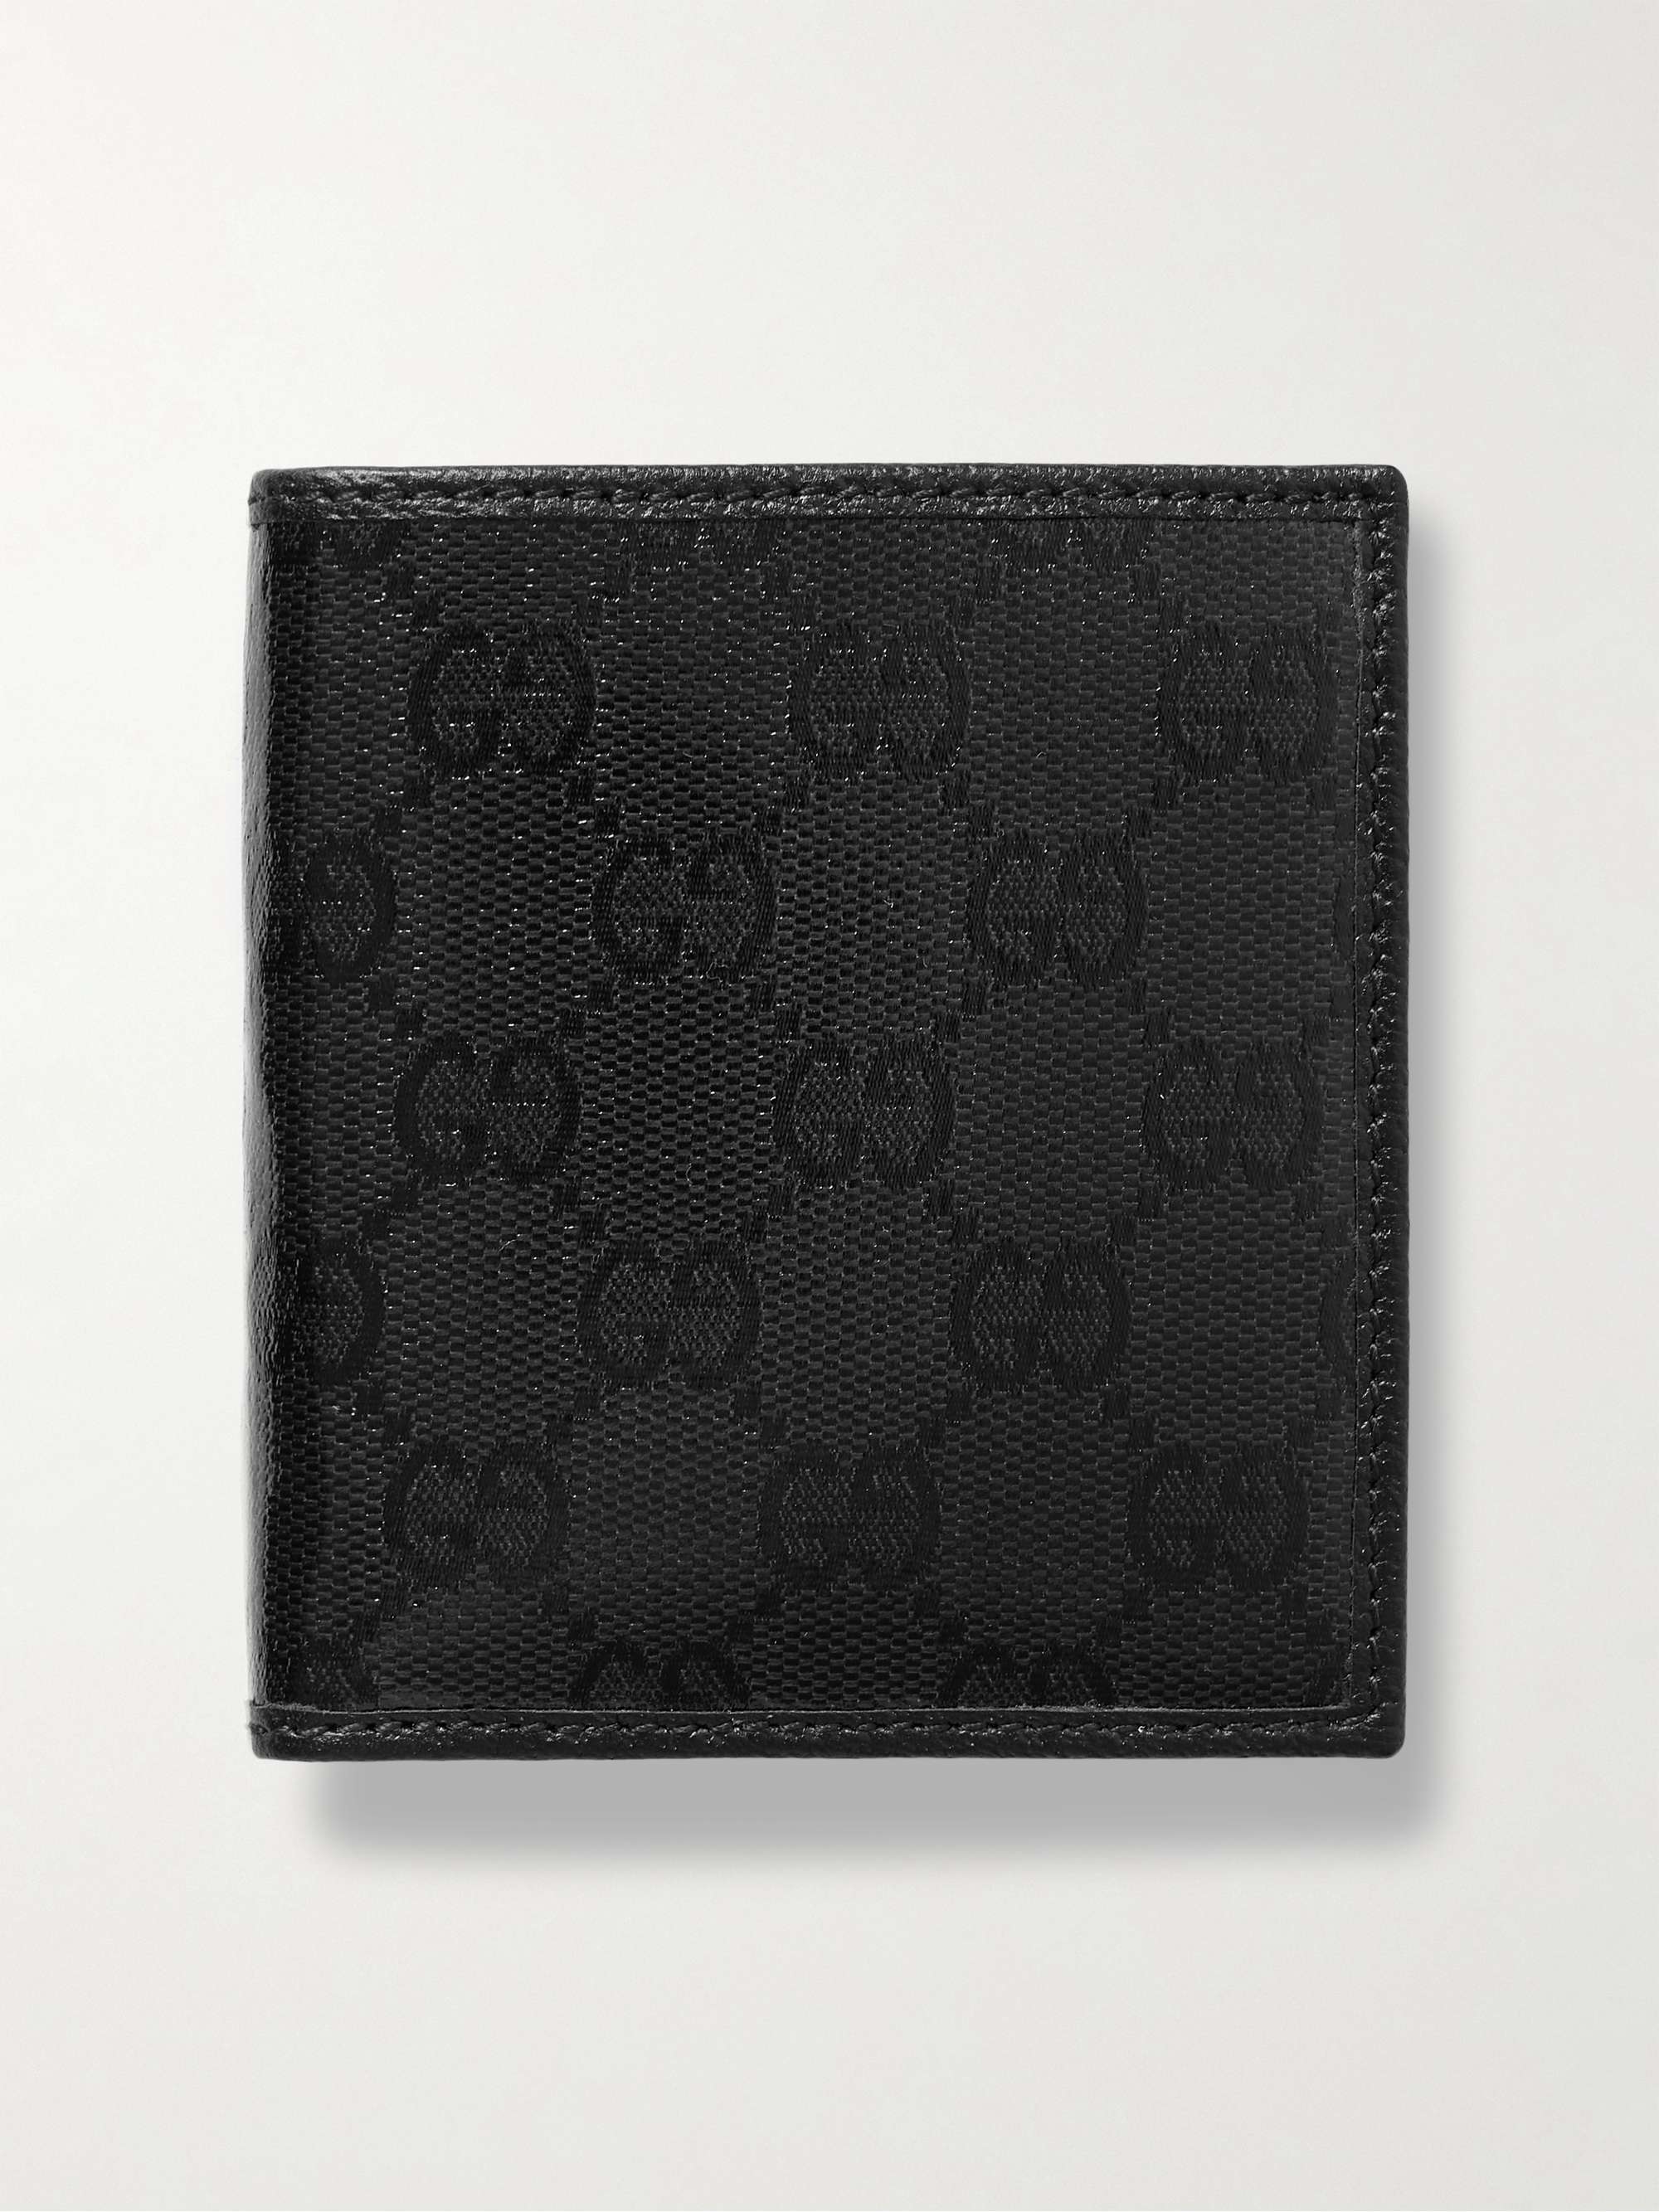 Gucci Men's Leather-Trimmed Billfold Wallet